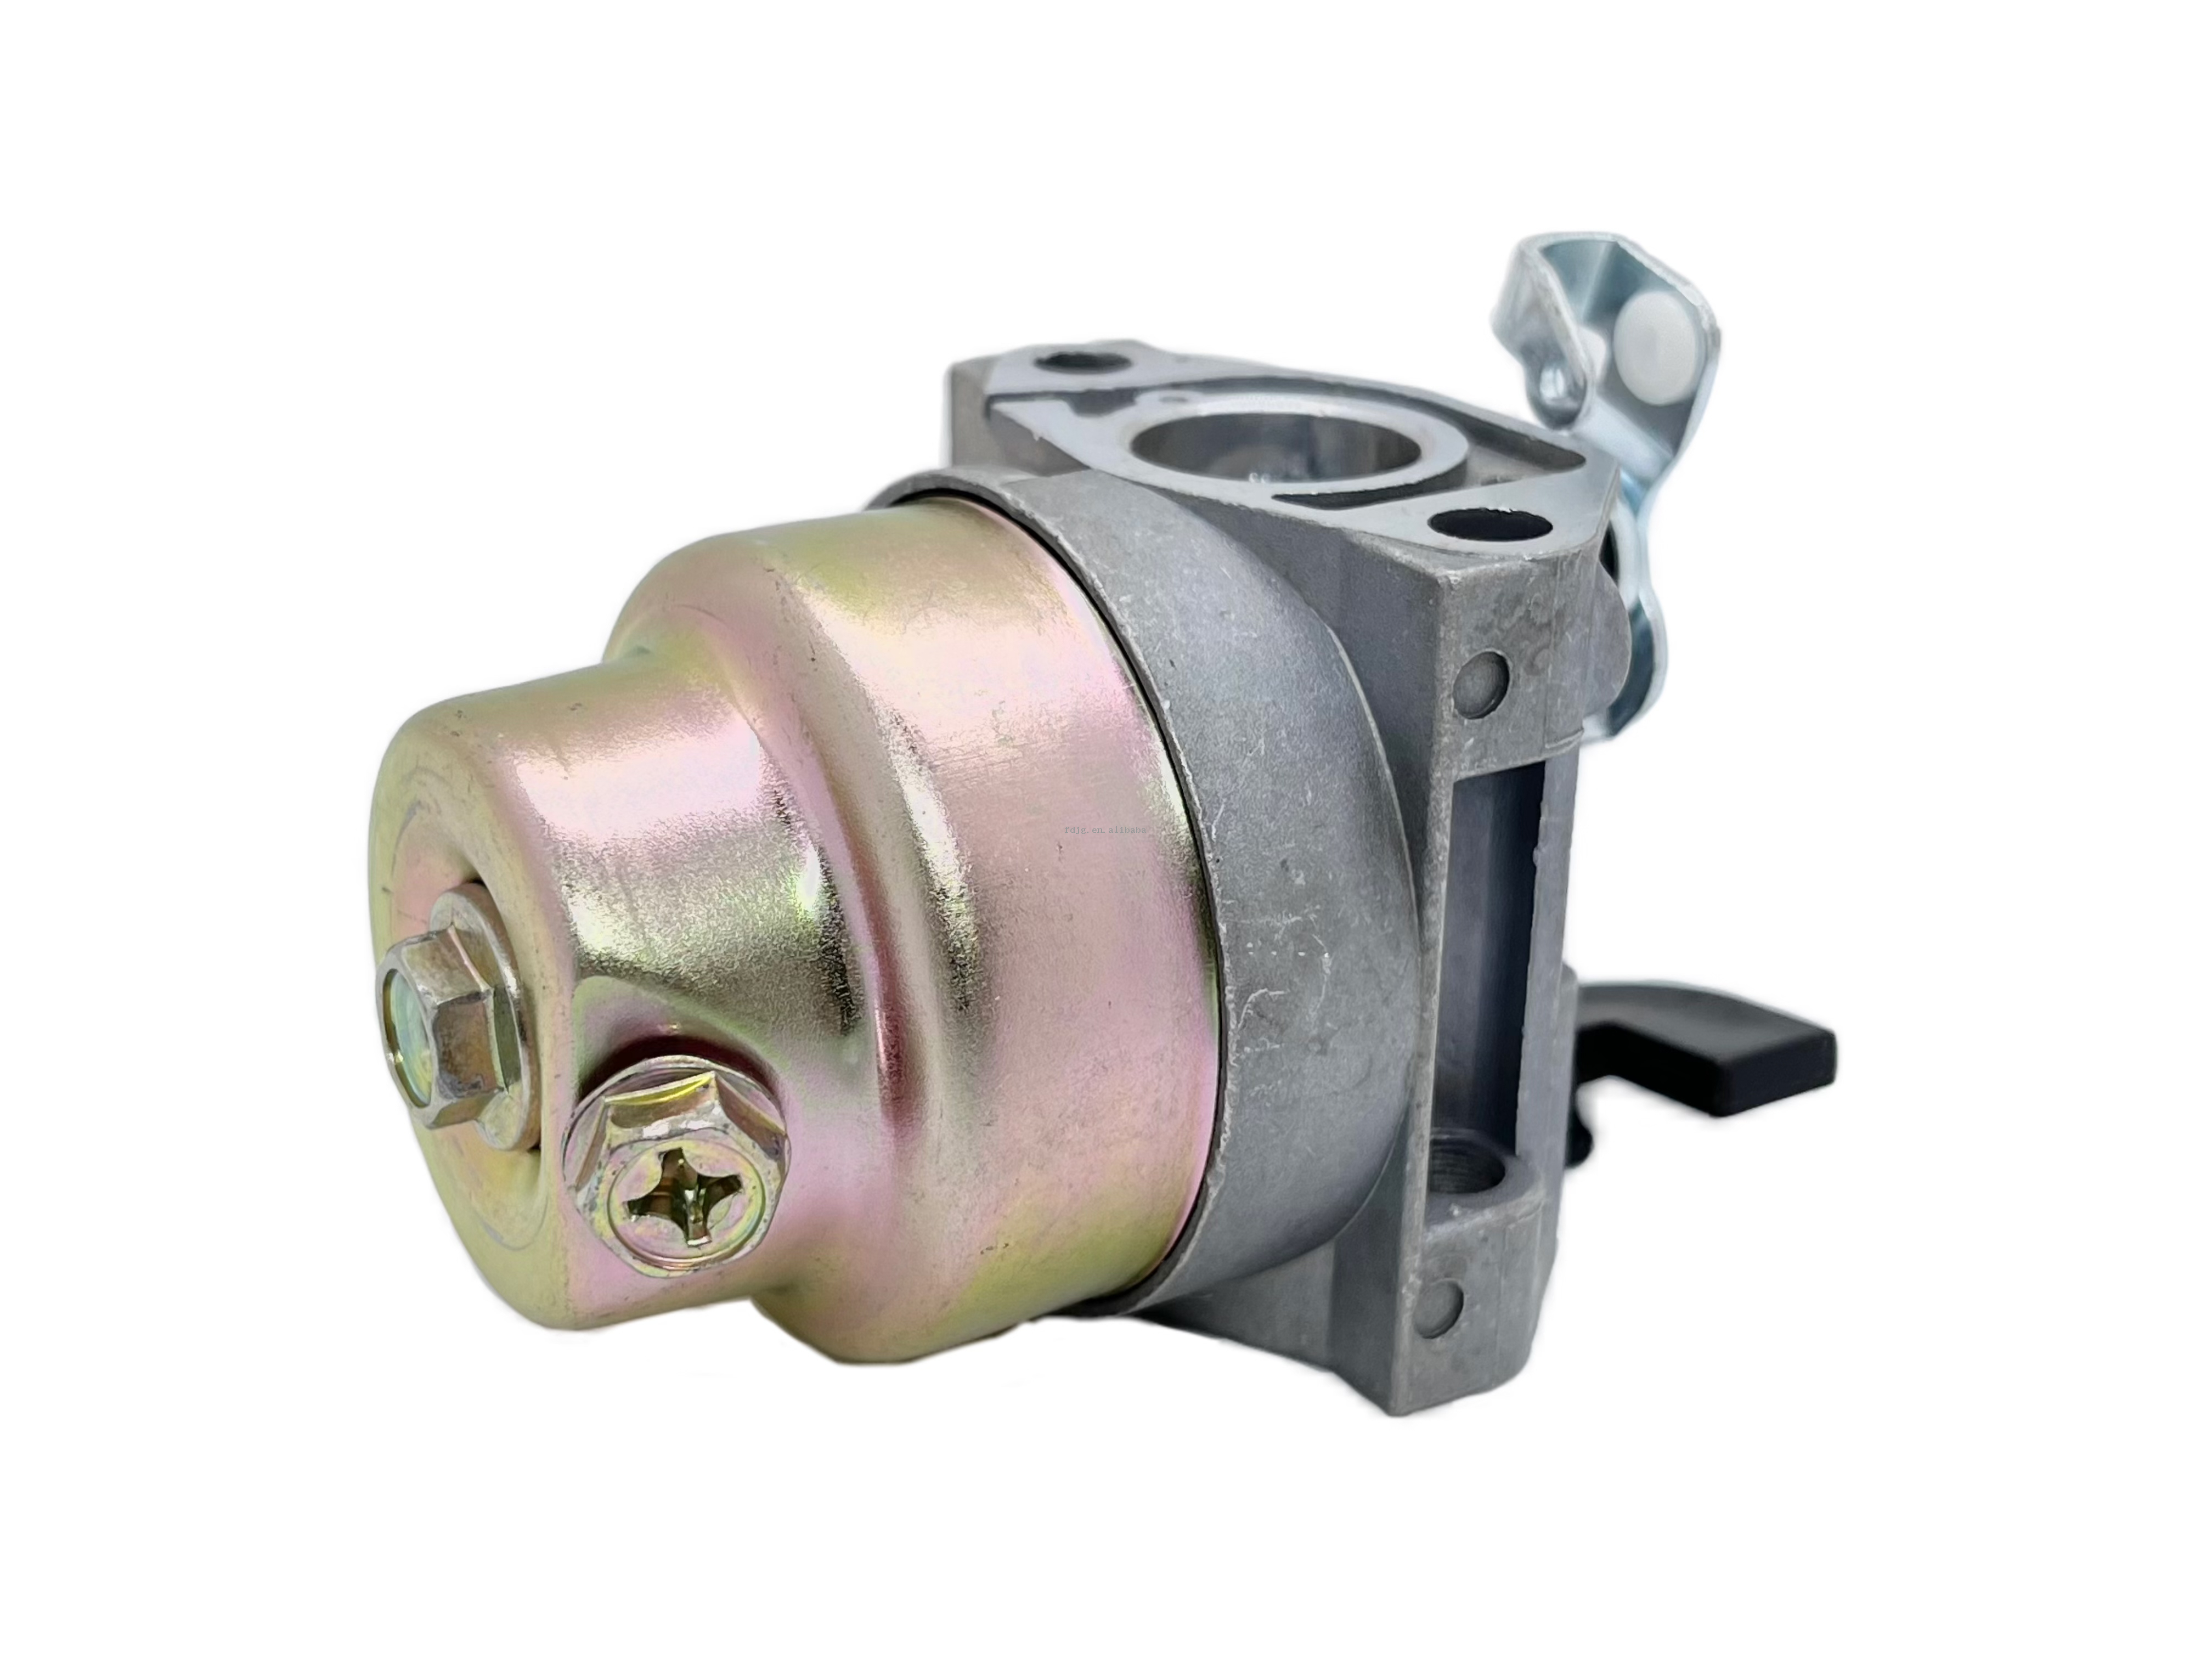 G200 Standard Easy-to-adjust Petrol Water Pump Generator Carburetor